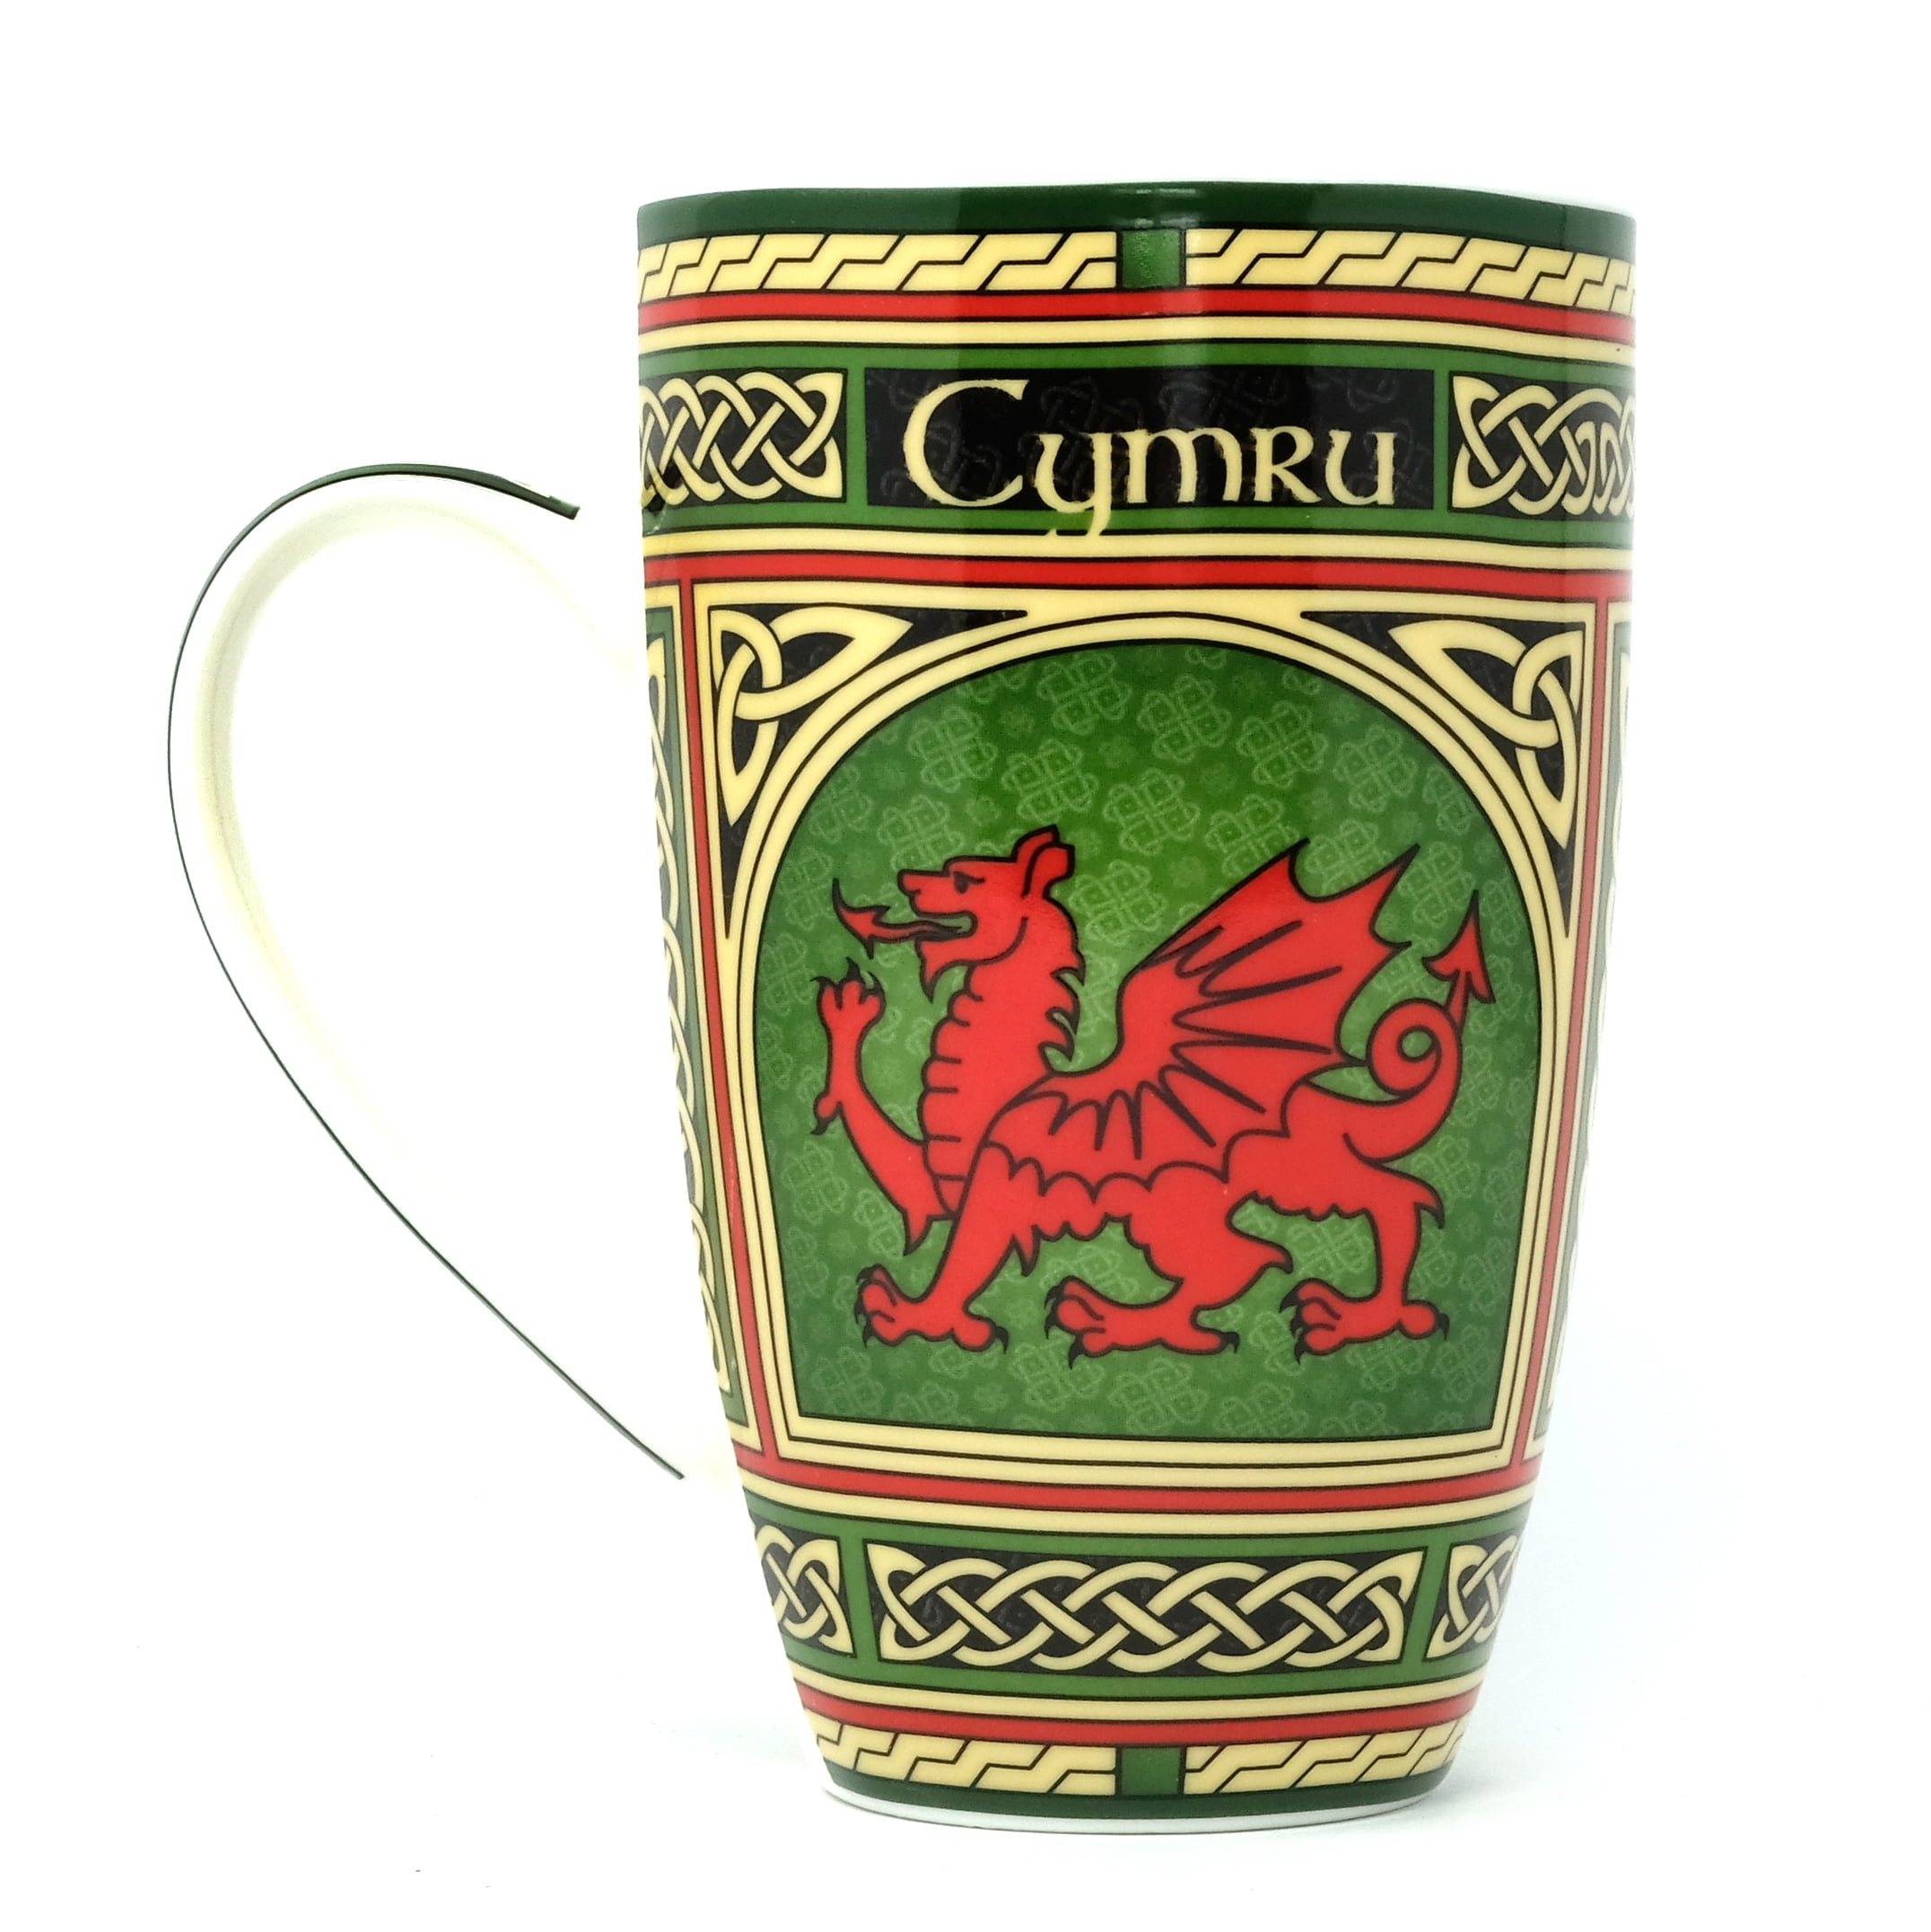  Irish Blessing bone china mug -May the road rise to